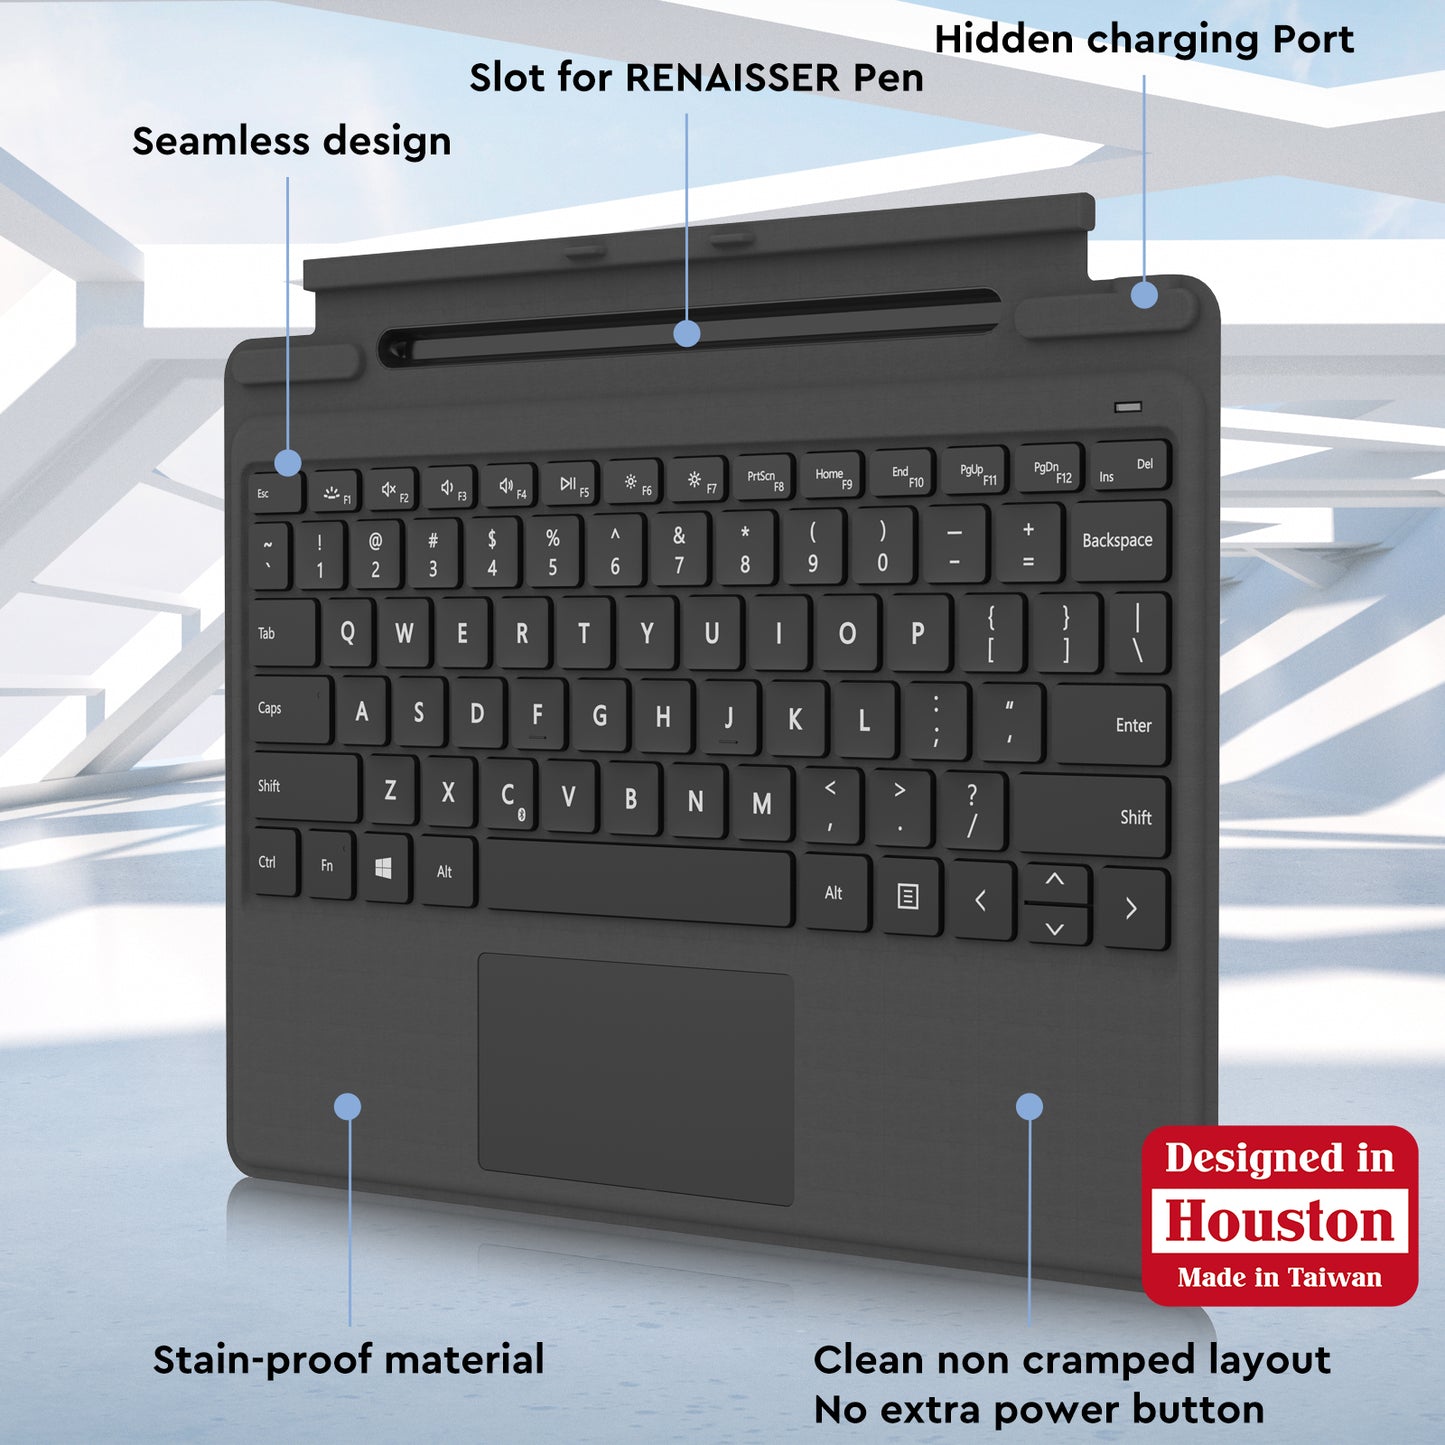 Pelican K8 Keyboard and Raphael 530 Combo